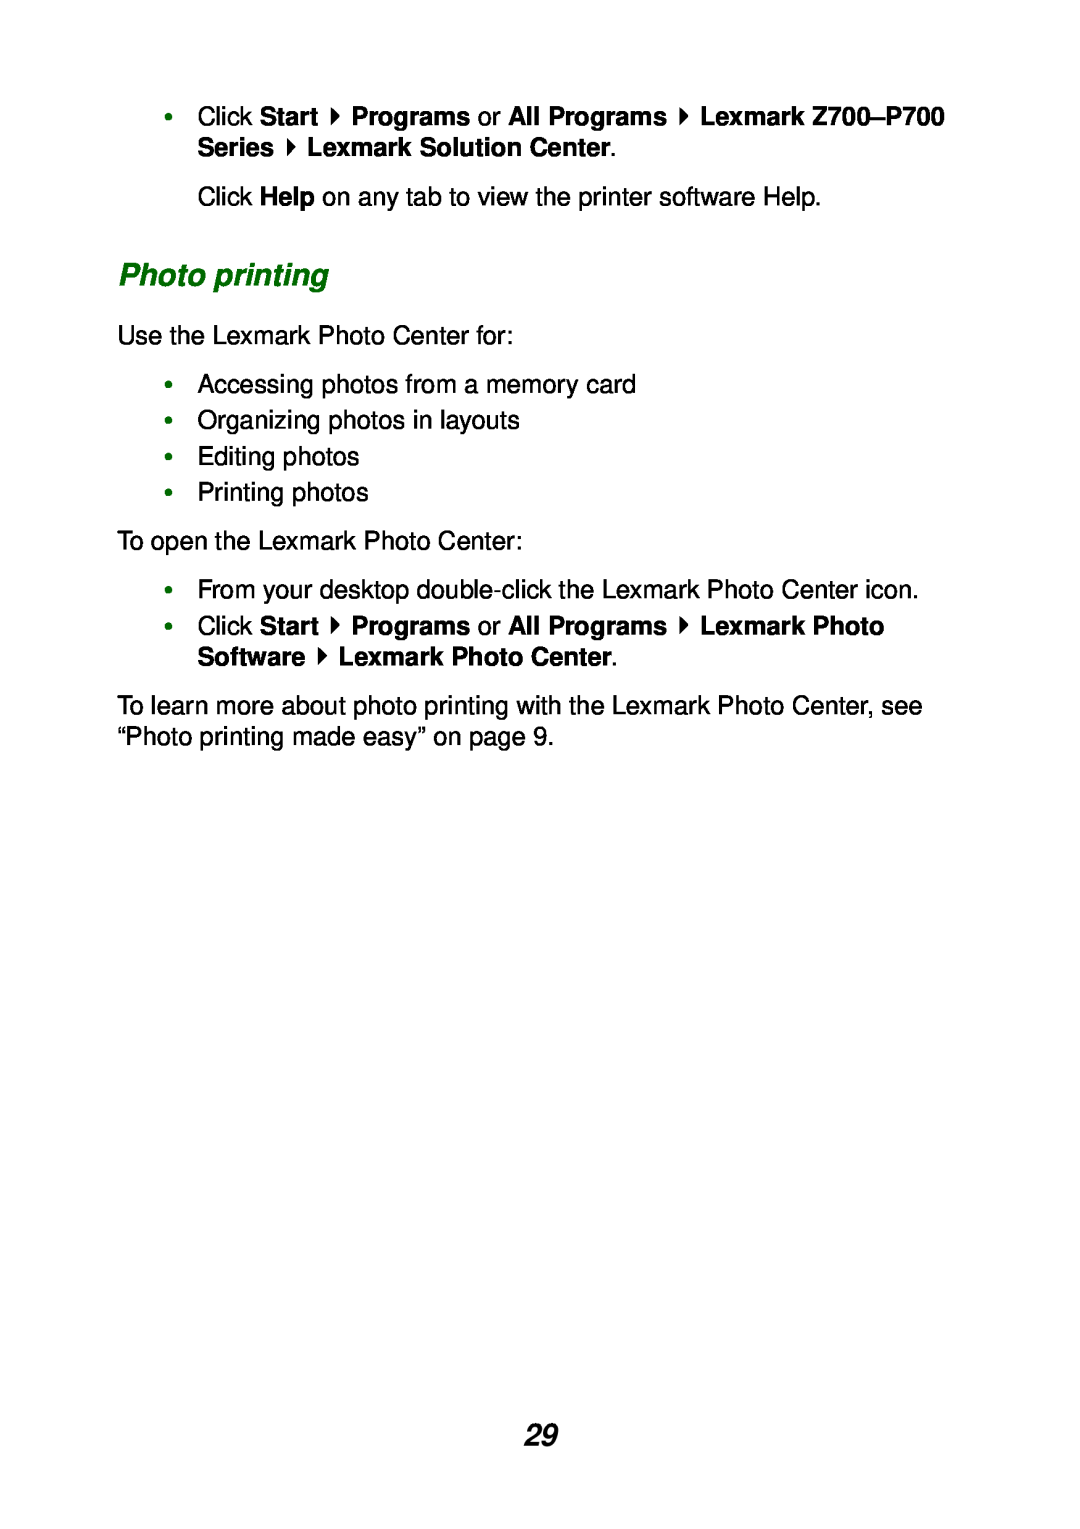 Lexmark P700 manual Photo printing 